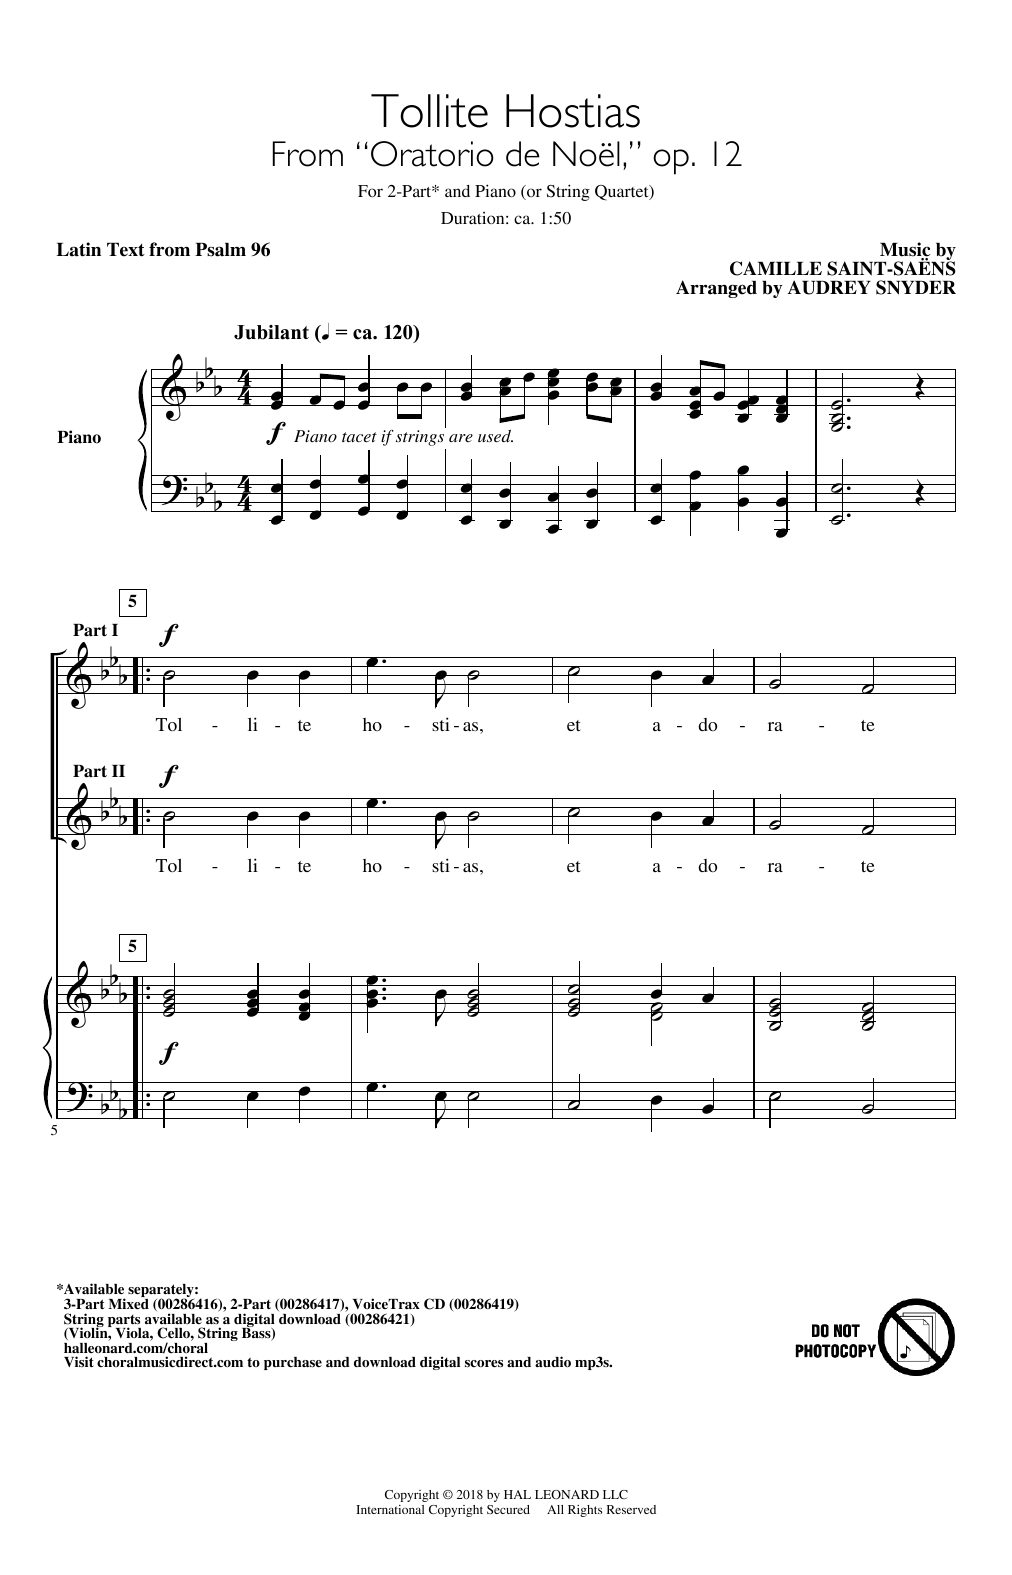 Camille Saint-Saens Tollite Hostias (arr. Audrey Snyder) Sheet Music Notes & Chords for 2-Part Choir - Download or Print PDF